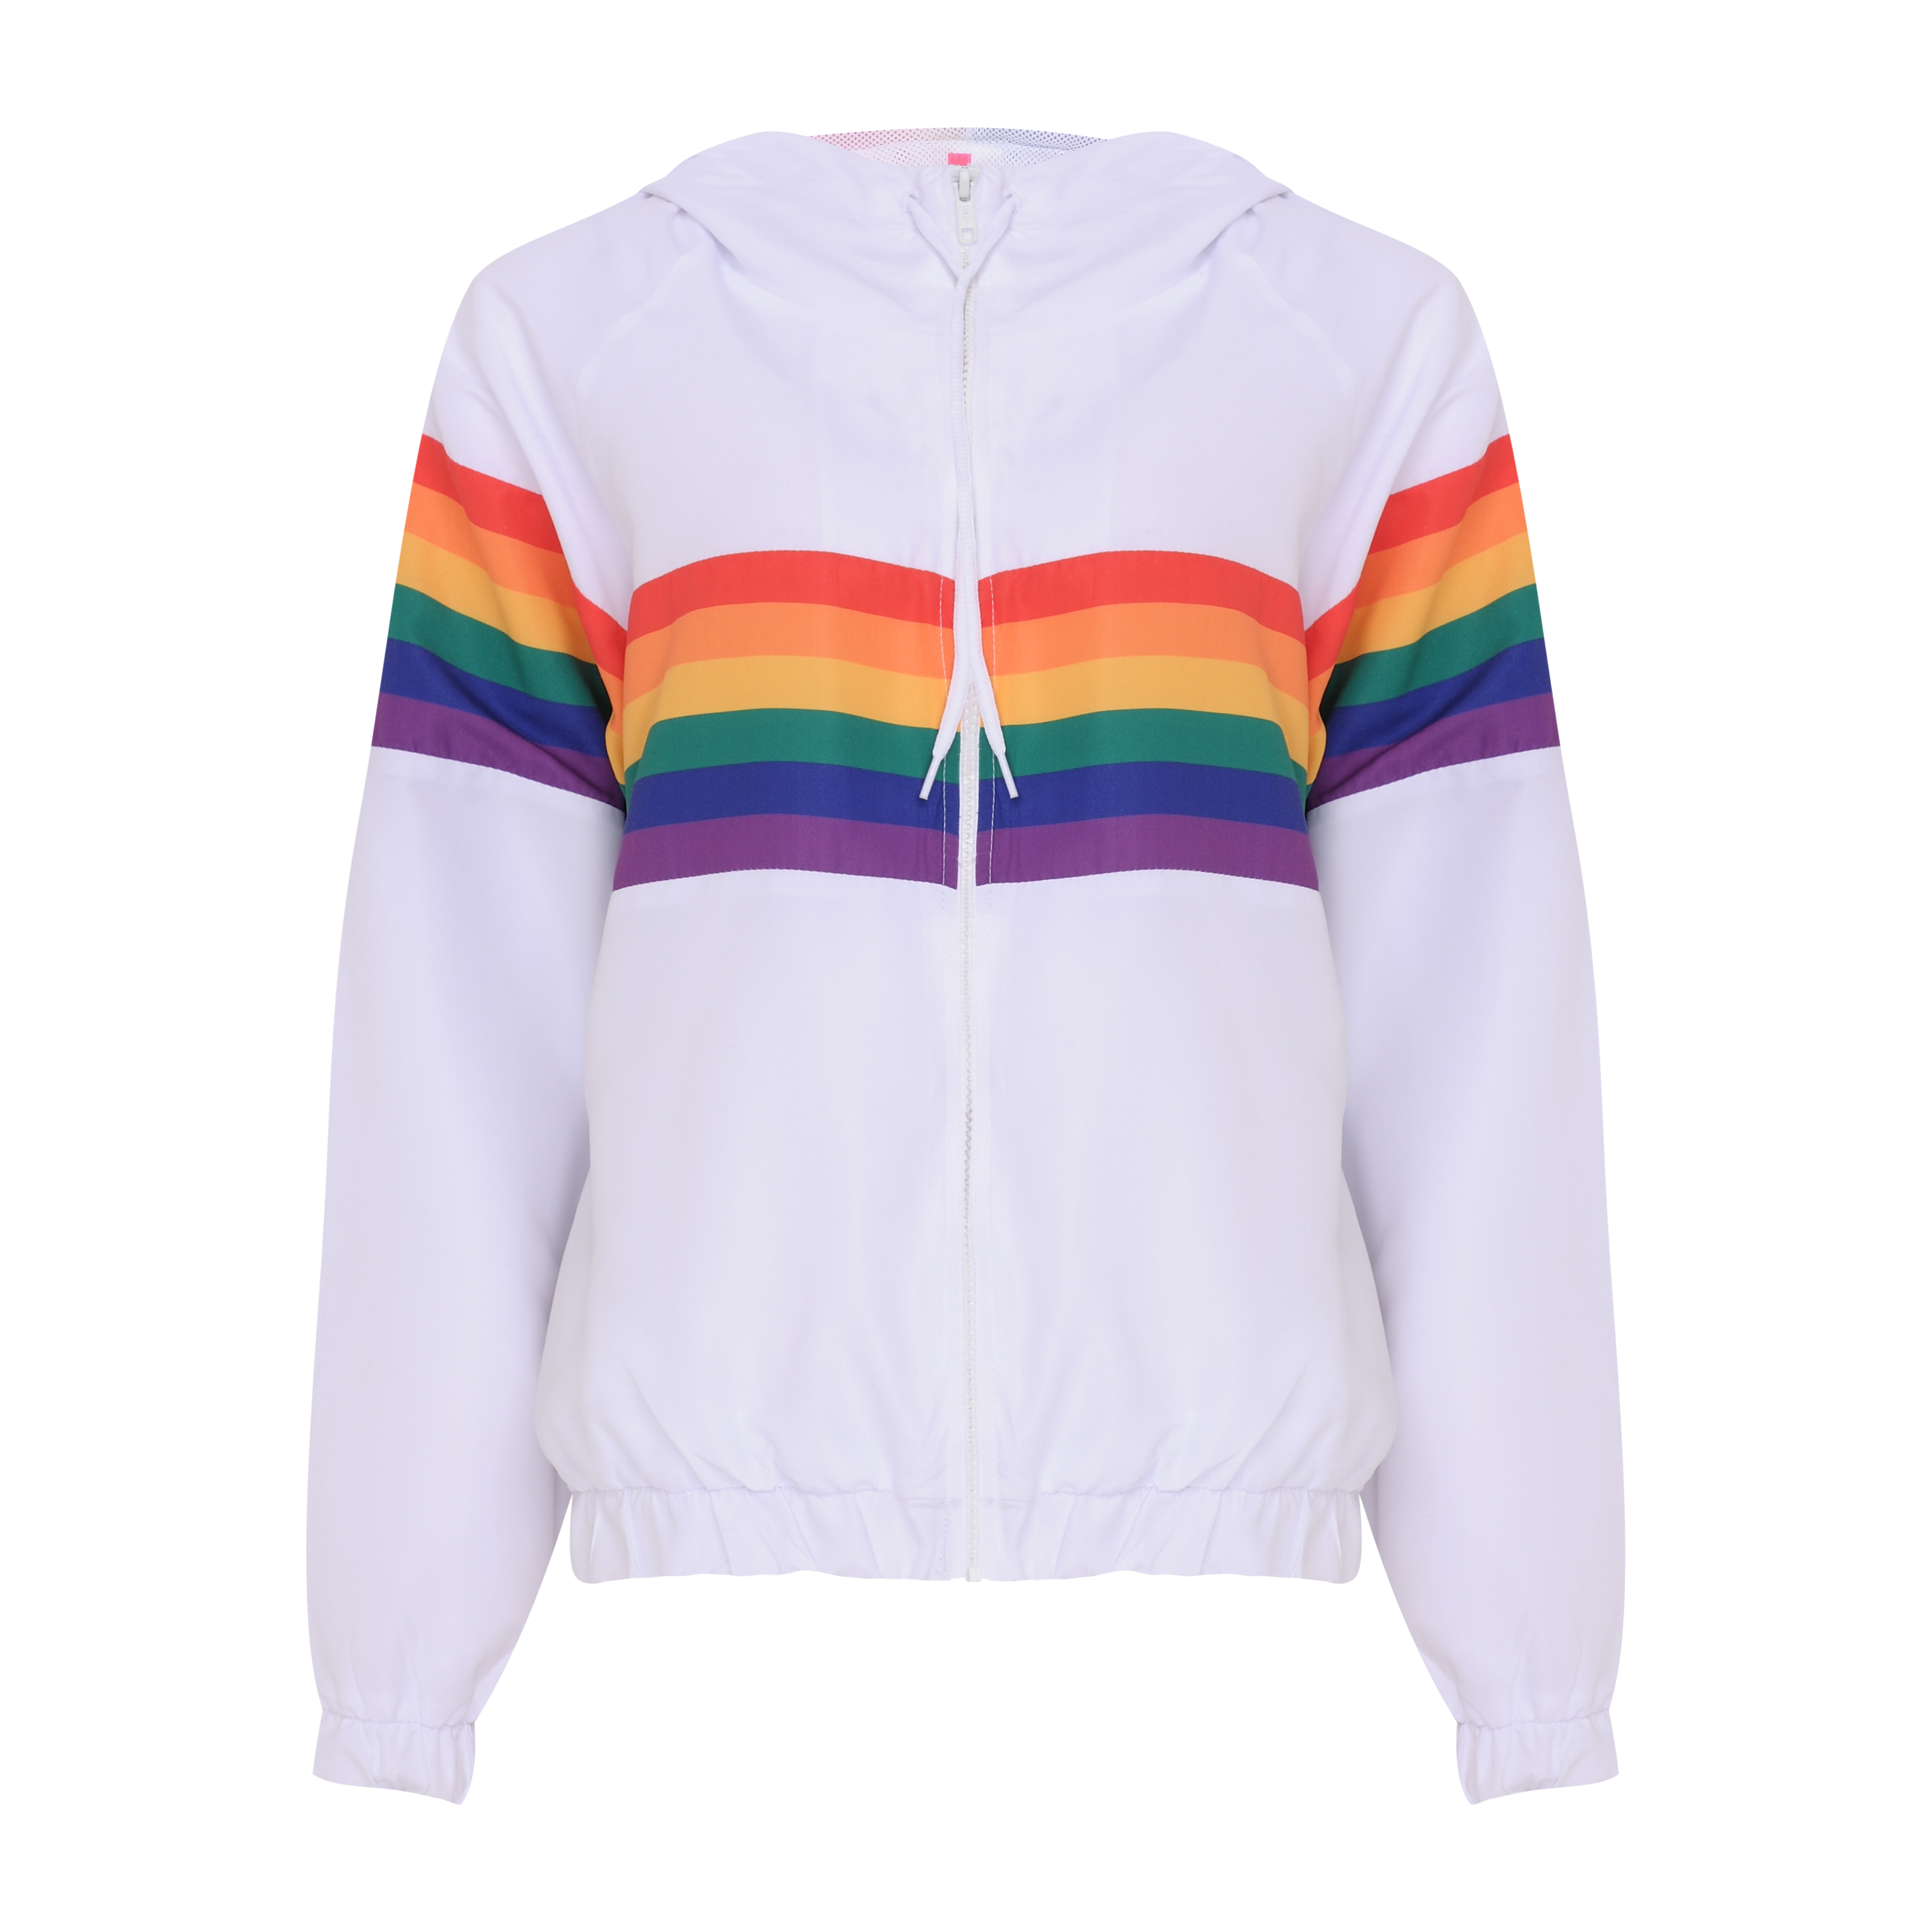 CEA_jaqueta corta vento feminina pride arco-íris com capuz branca_R$159.99